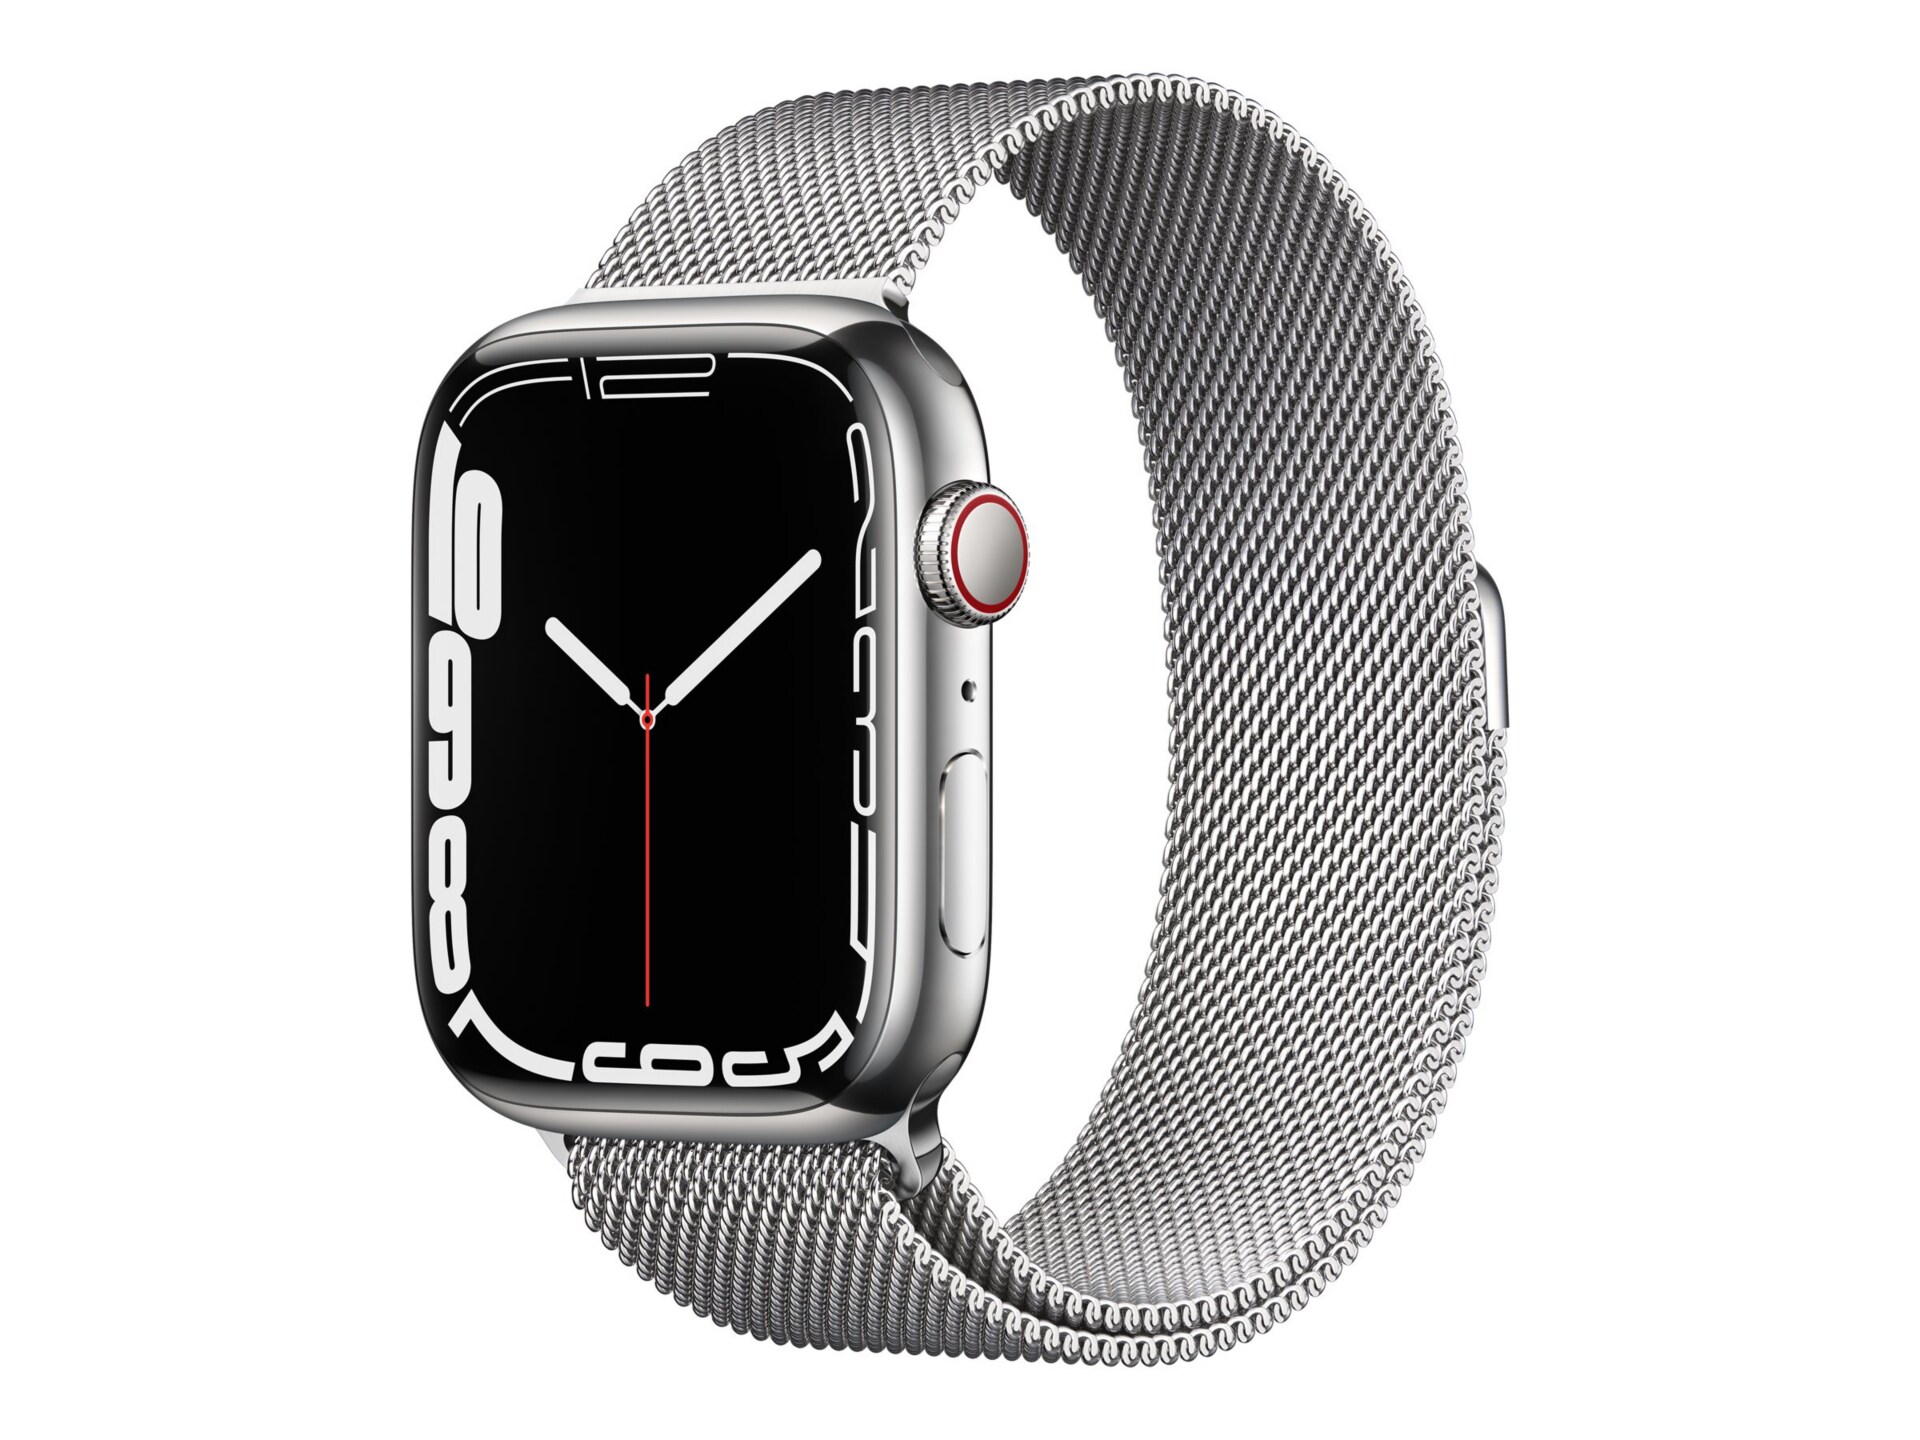 Apple Watch Series 7 (GPS + Cellular) - silver stainless steel - smart watc